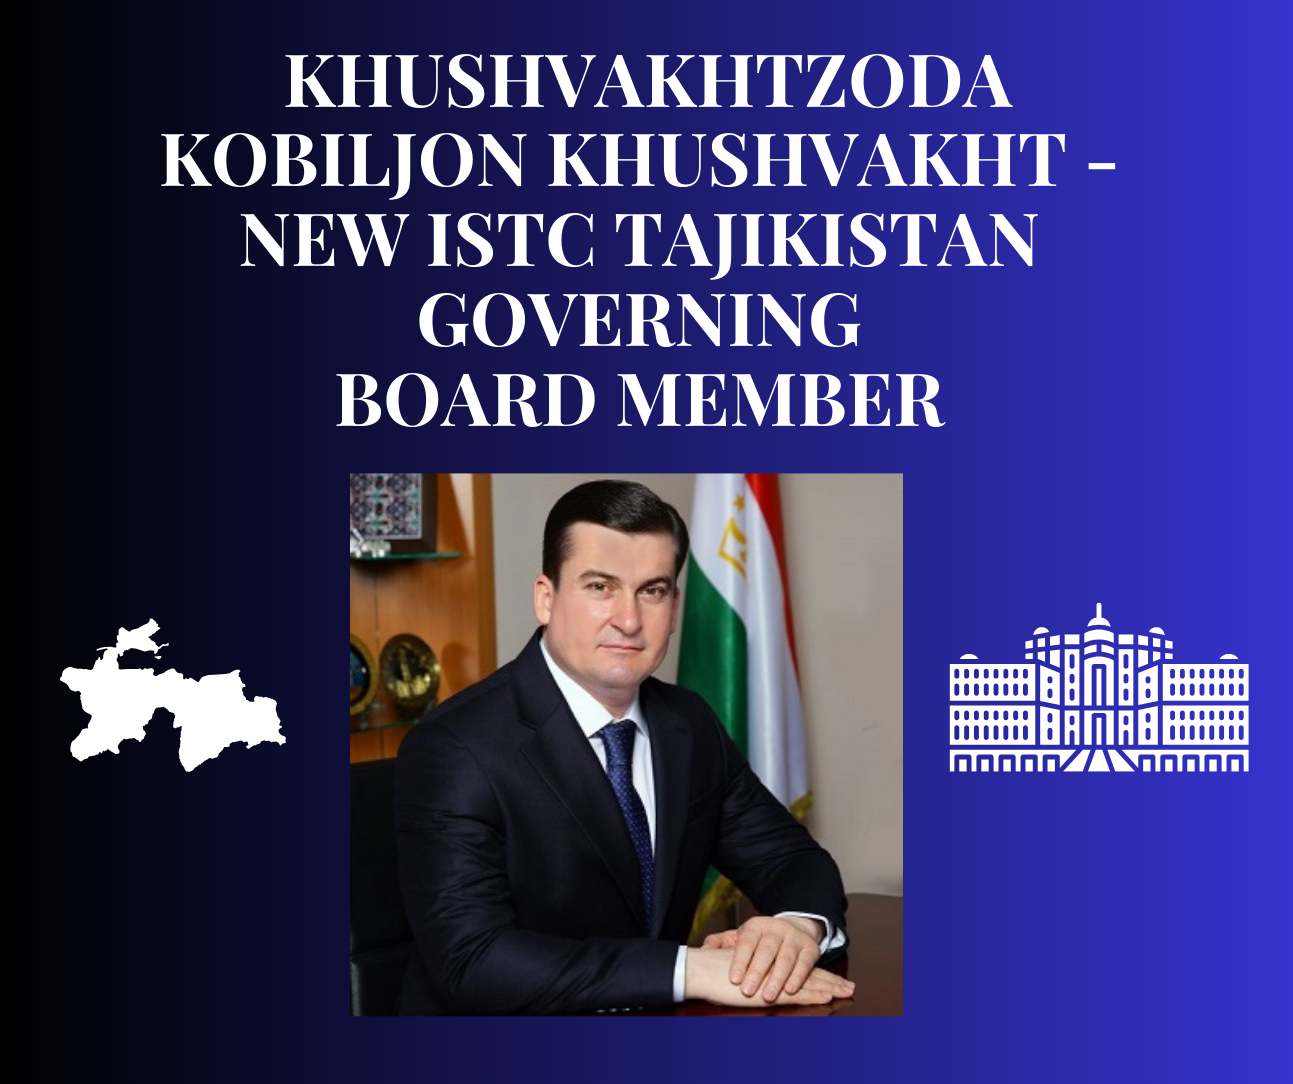 ISTC Governing Board has a new member from ISTC Tajikistan